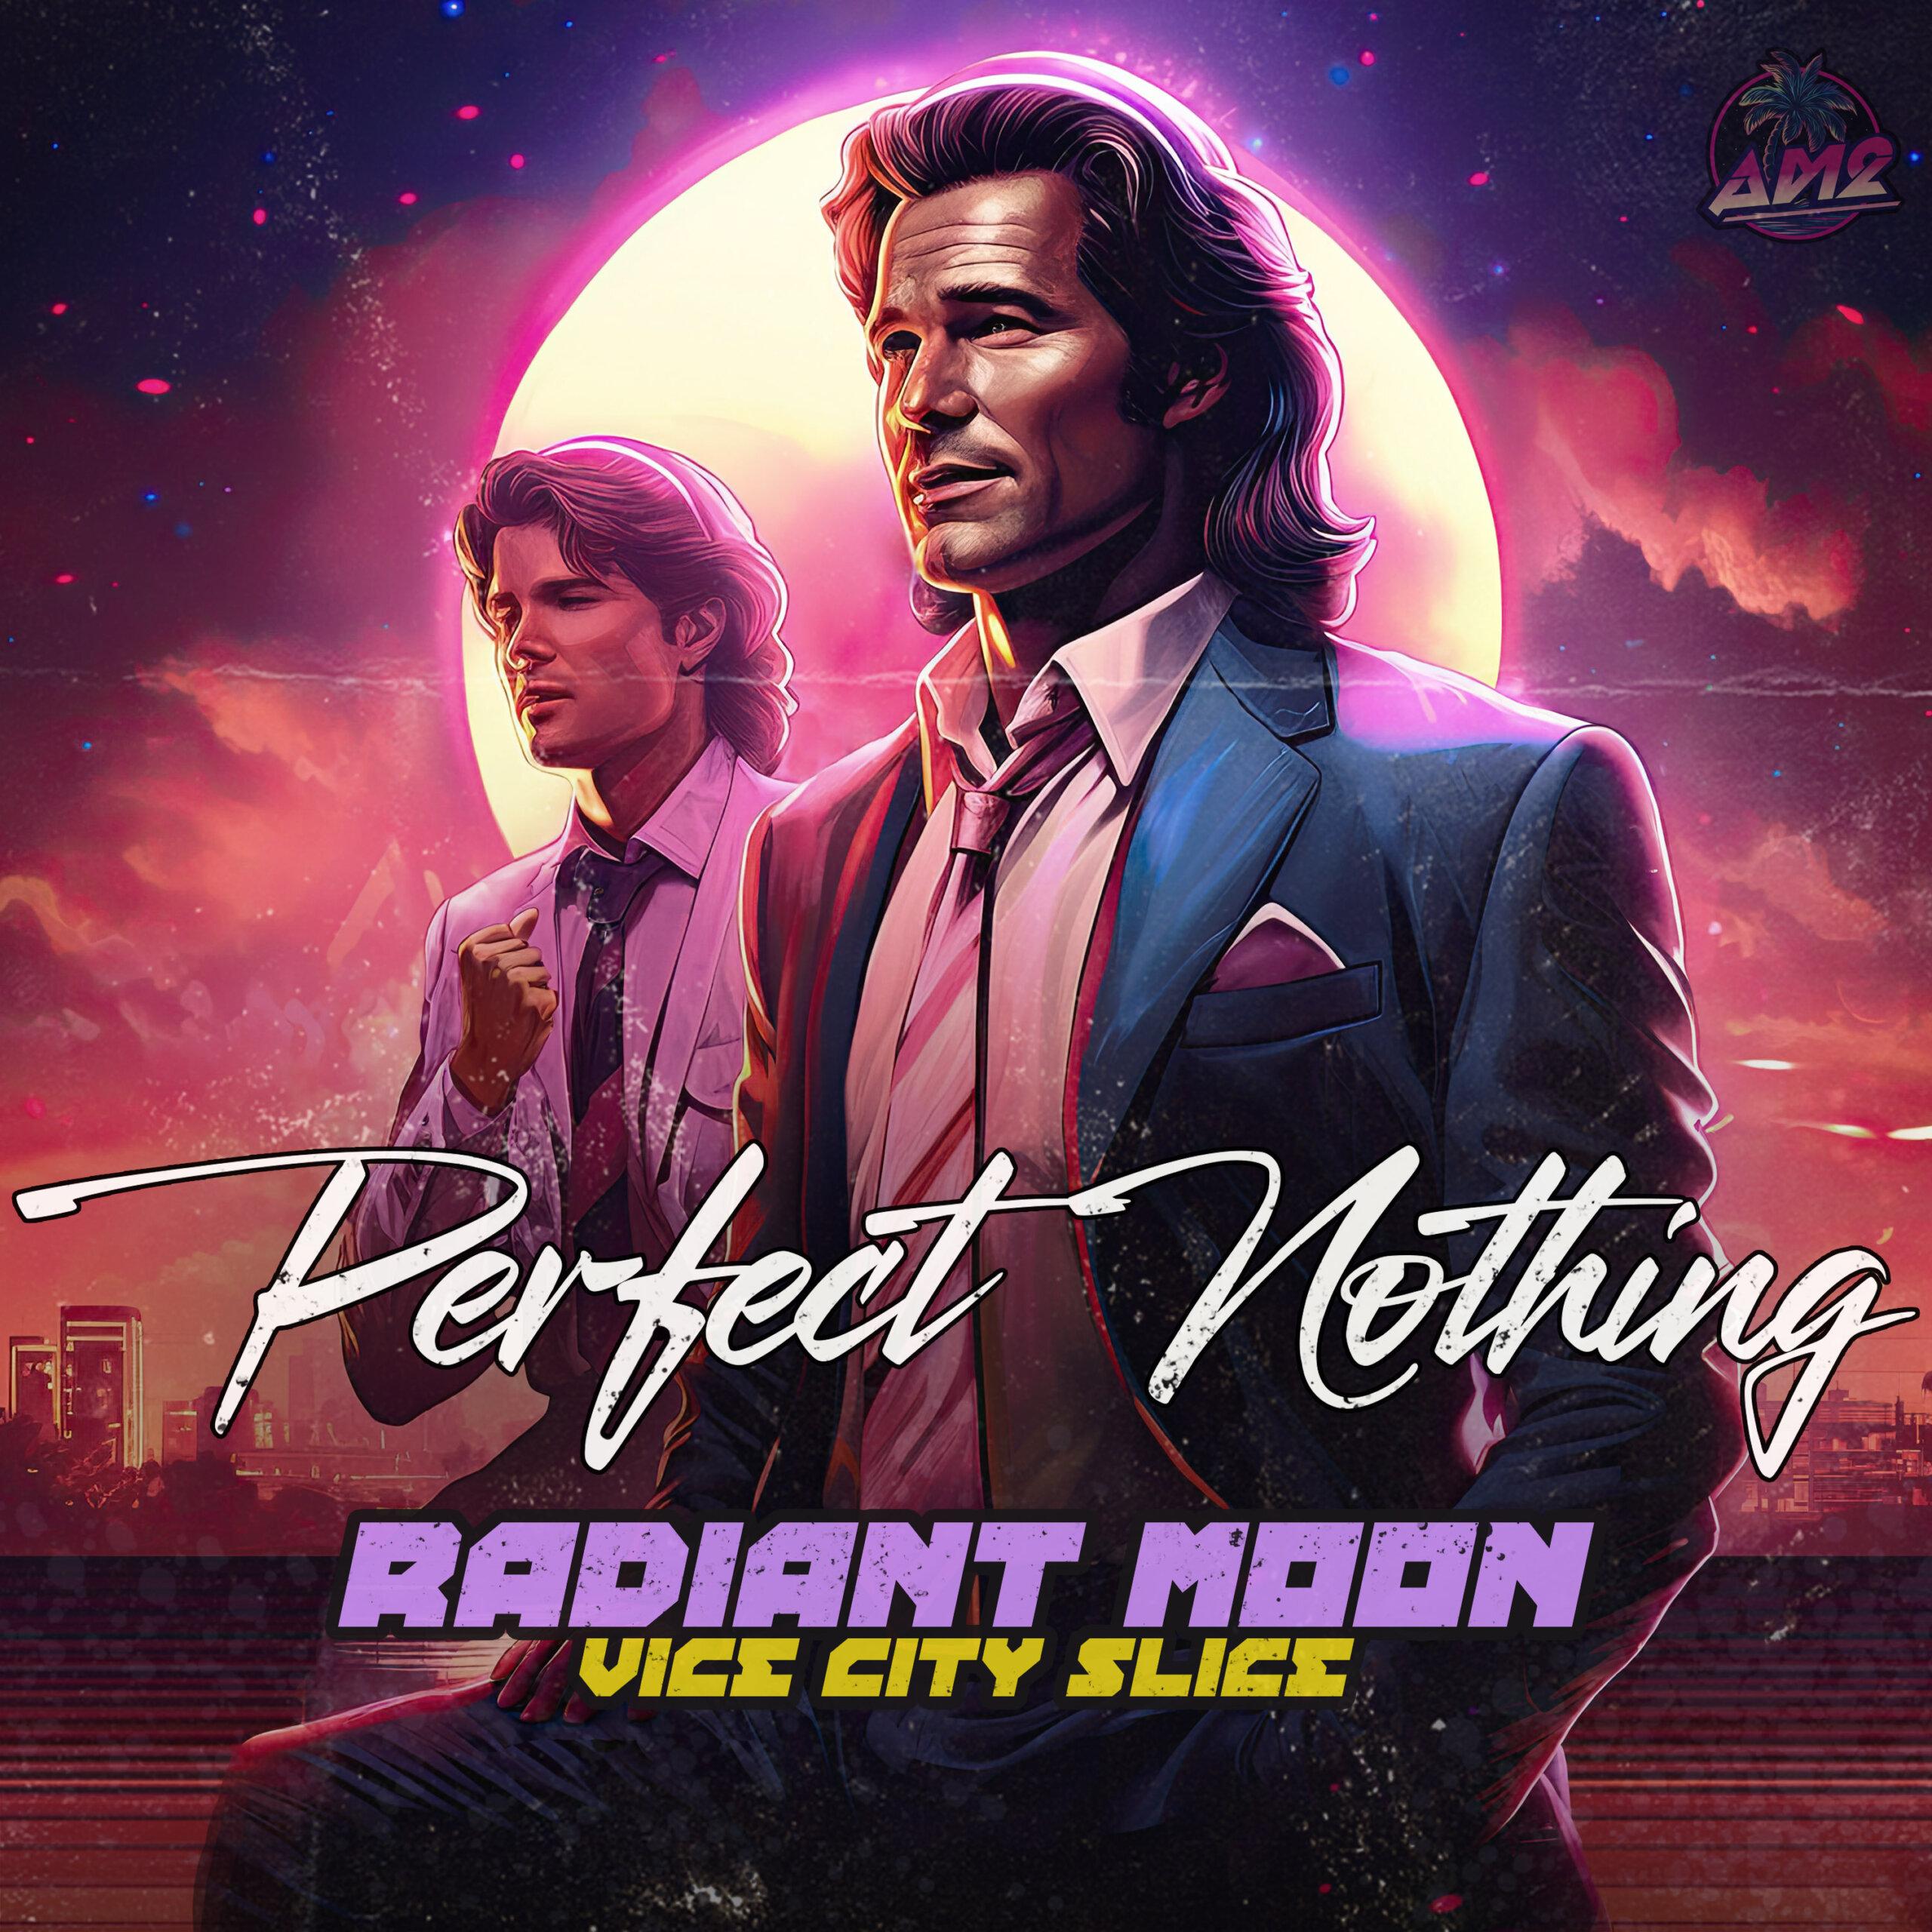 Radiant Moon – Vice City Slice